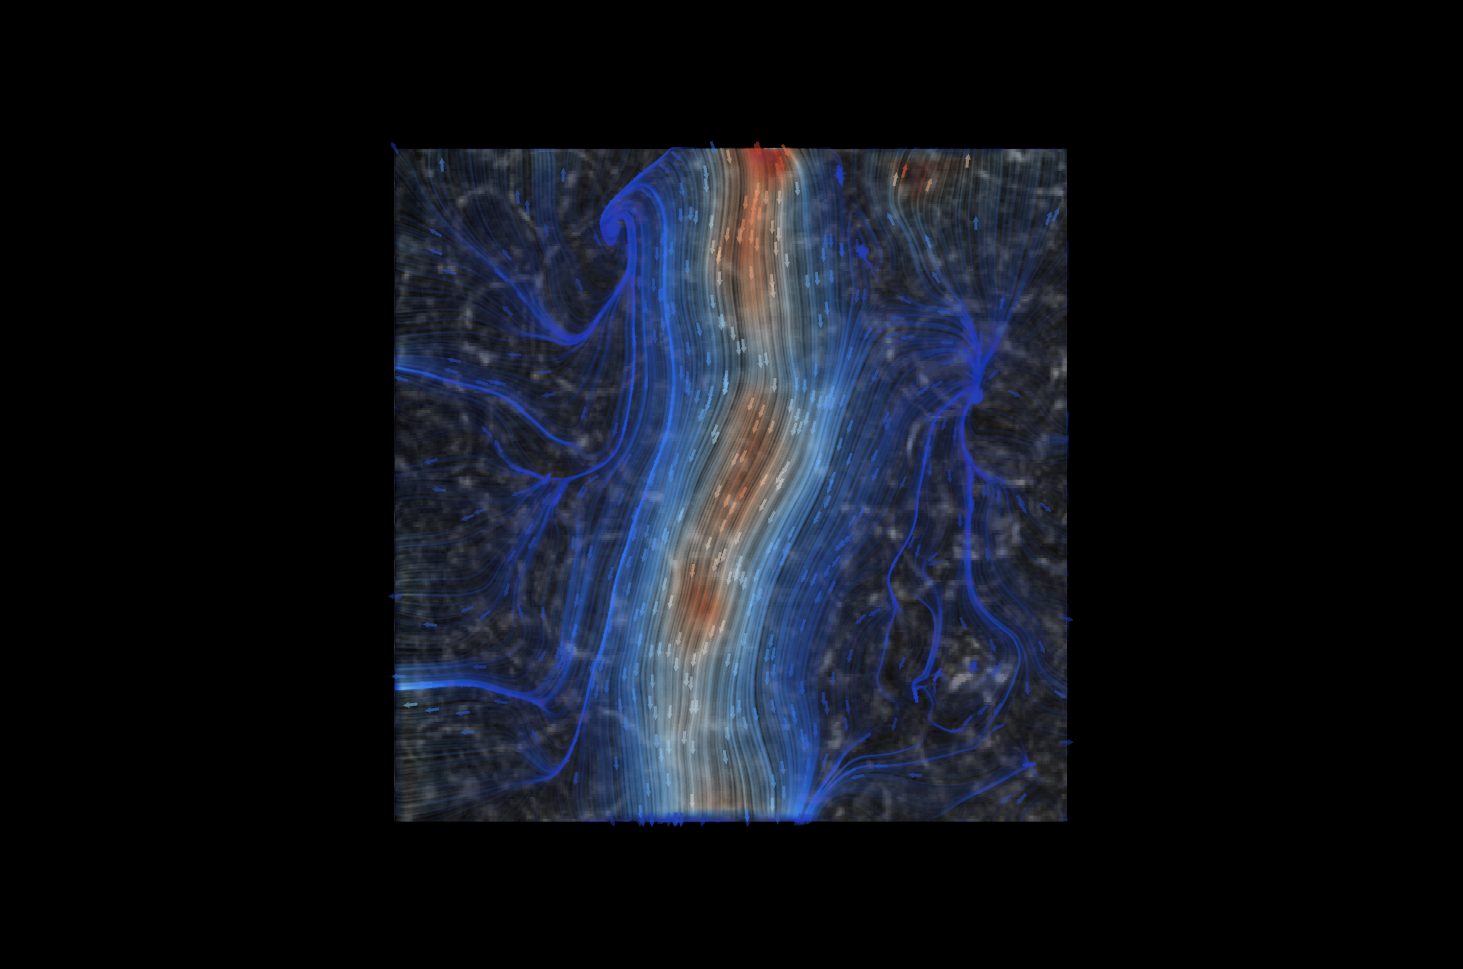 Cilia-driven mucus flow visualization by David Borland